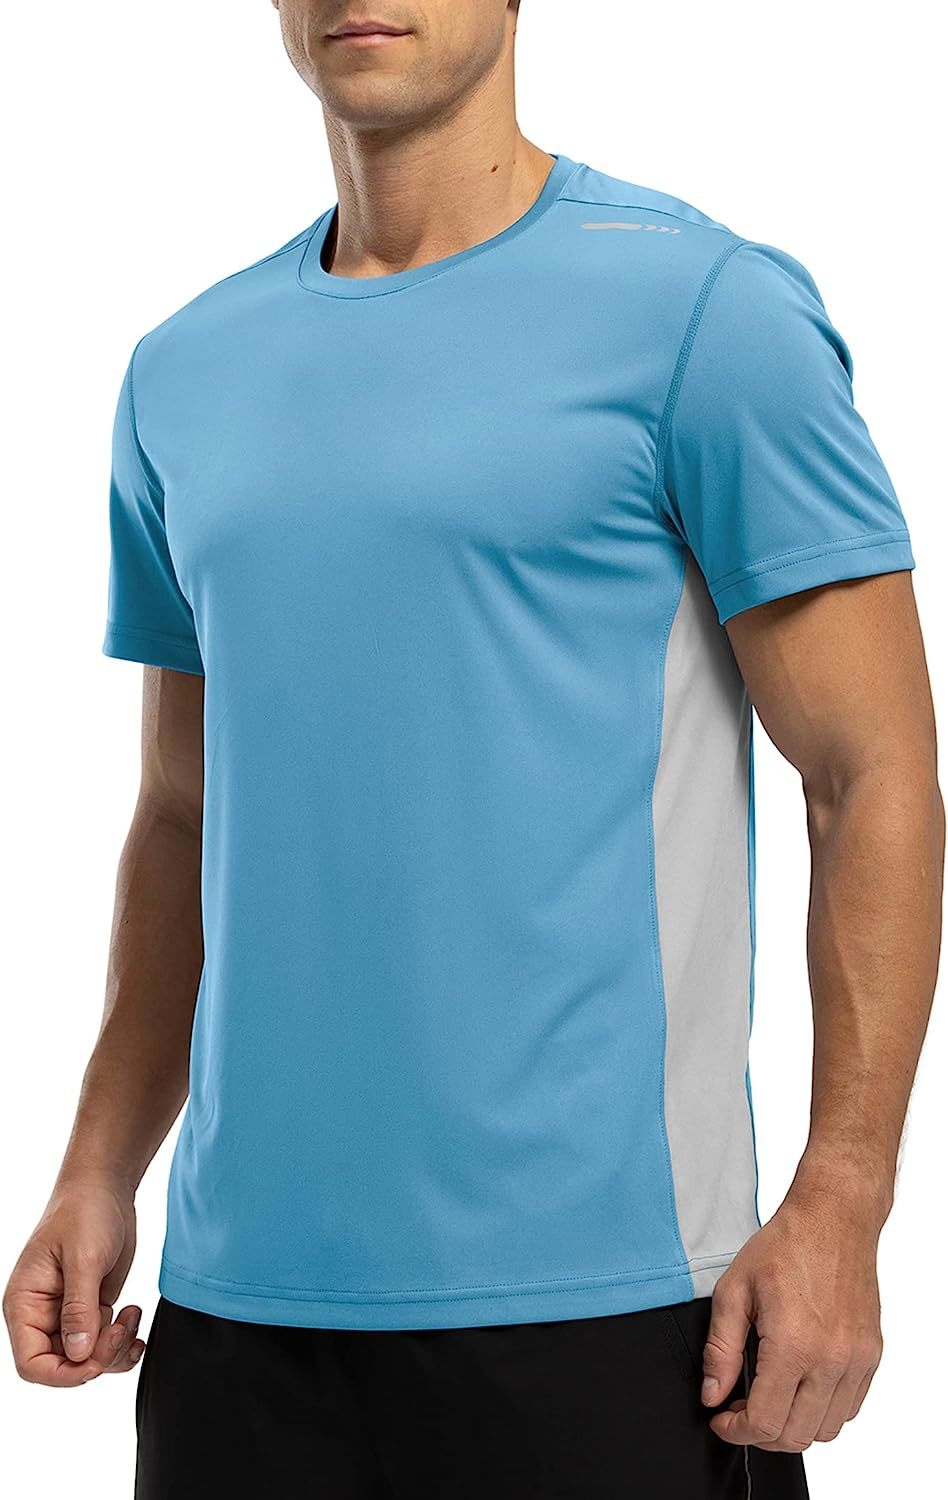 Basudam Men'S Short Sleeve Shirts Quick Dry Cool Upf 50+ Lightweight, Shirts - $37.99